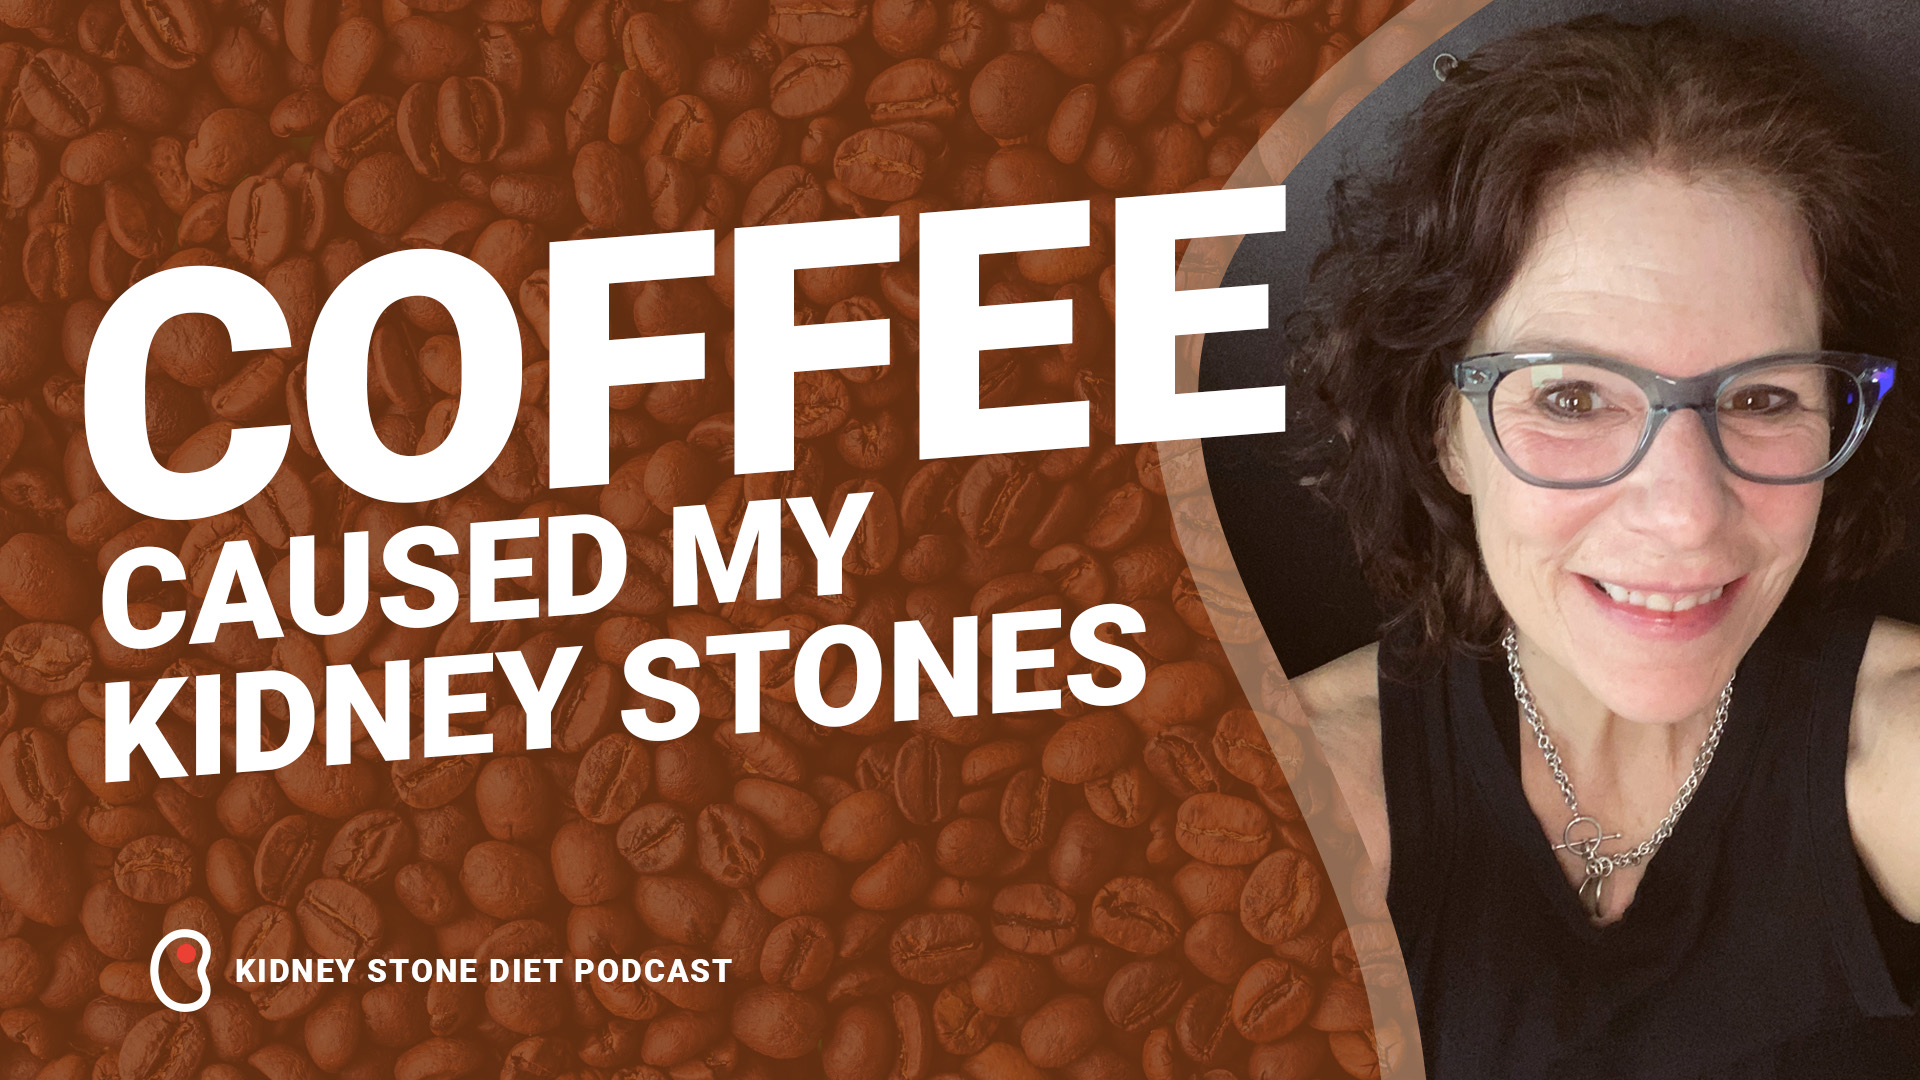 Coffee caused my kidney stones